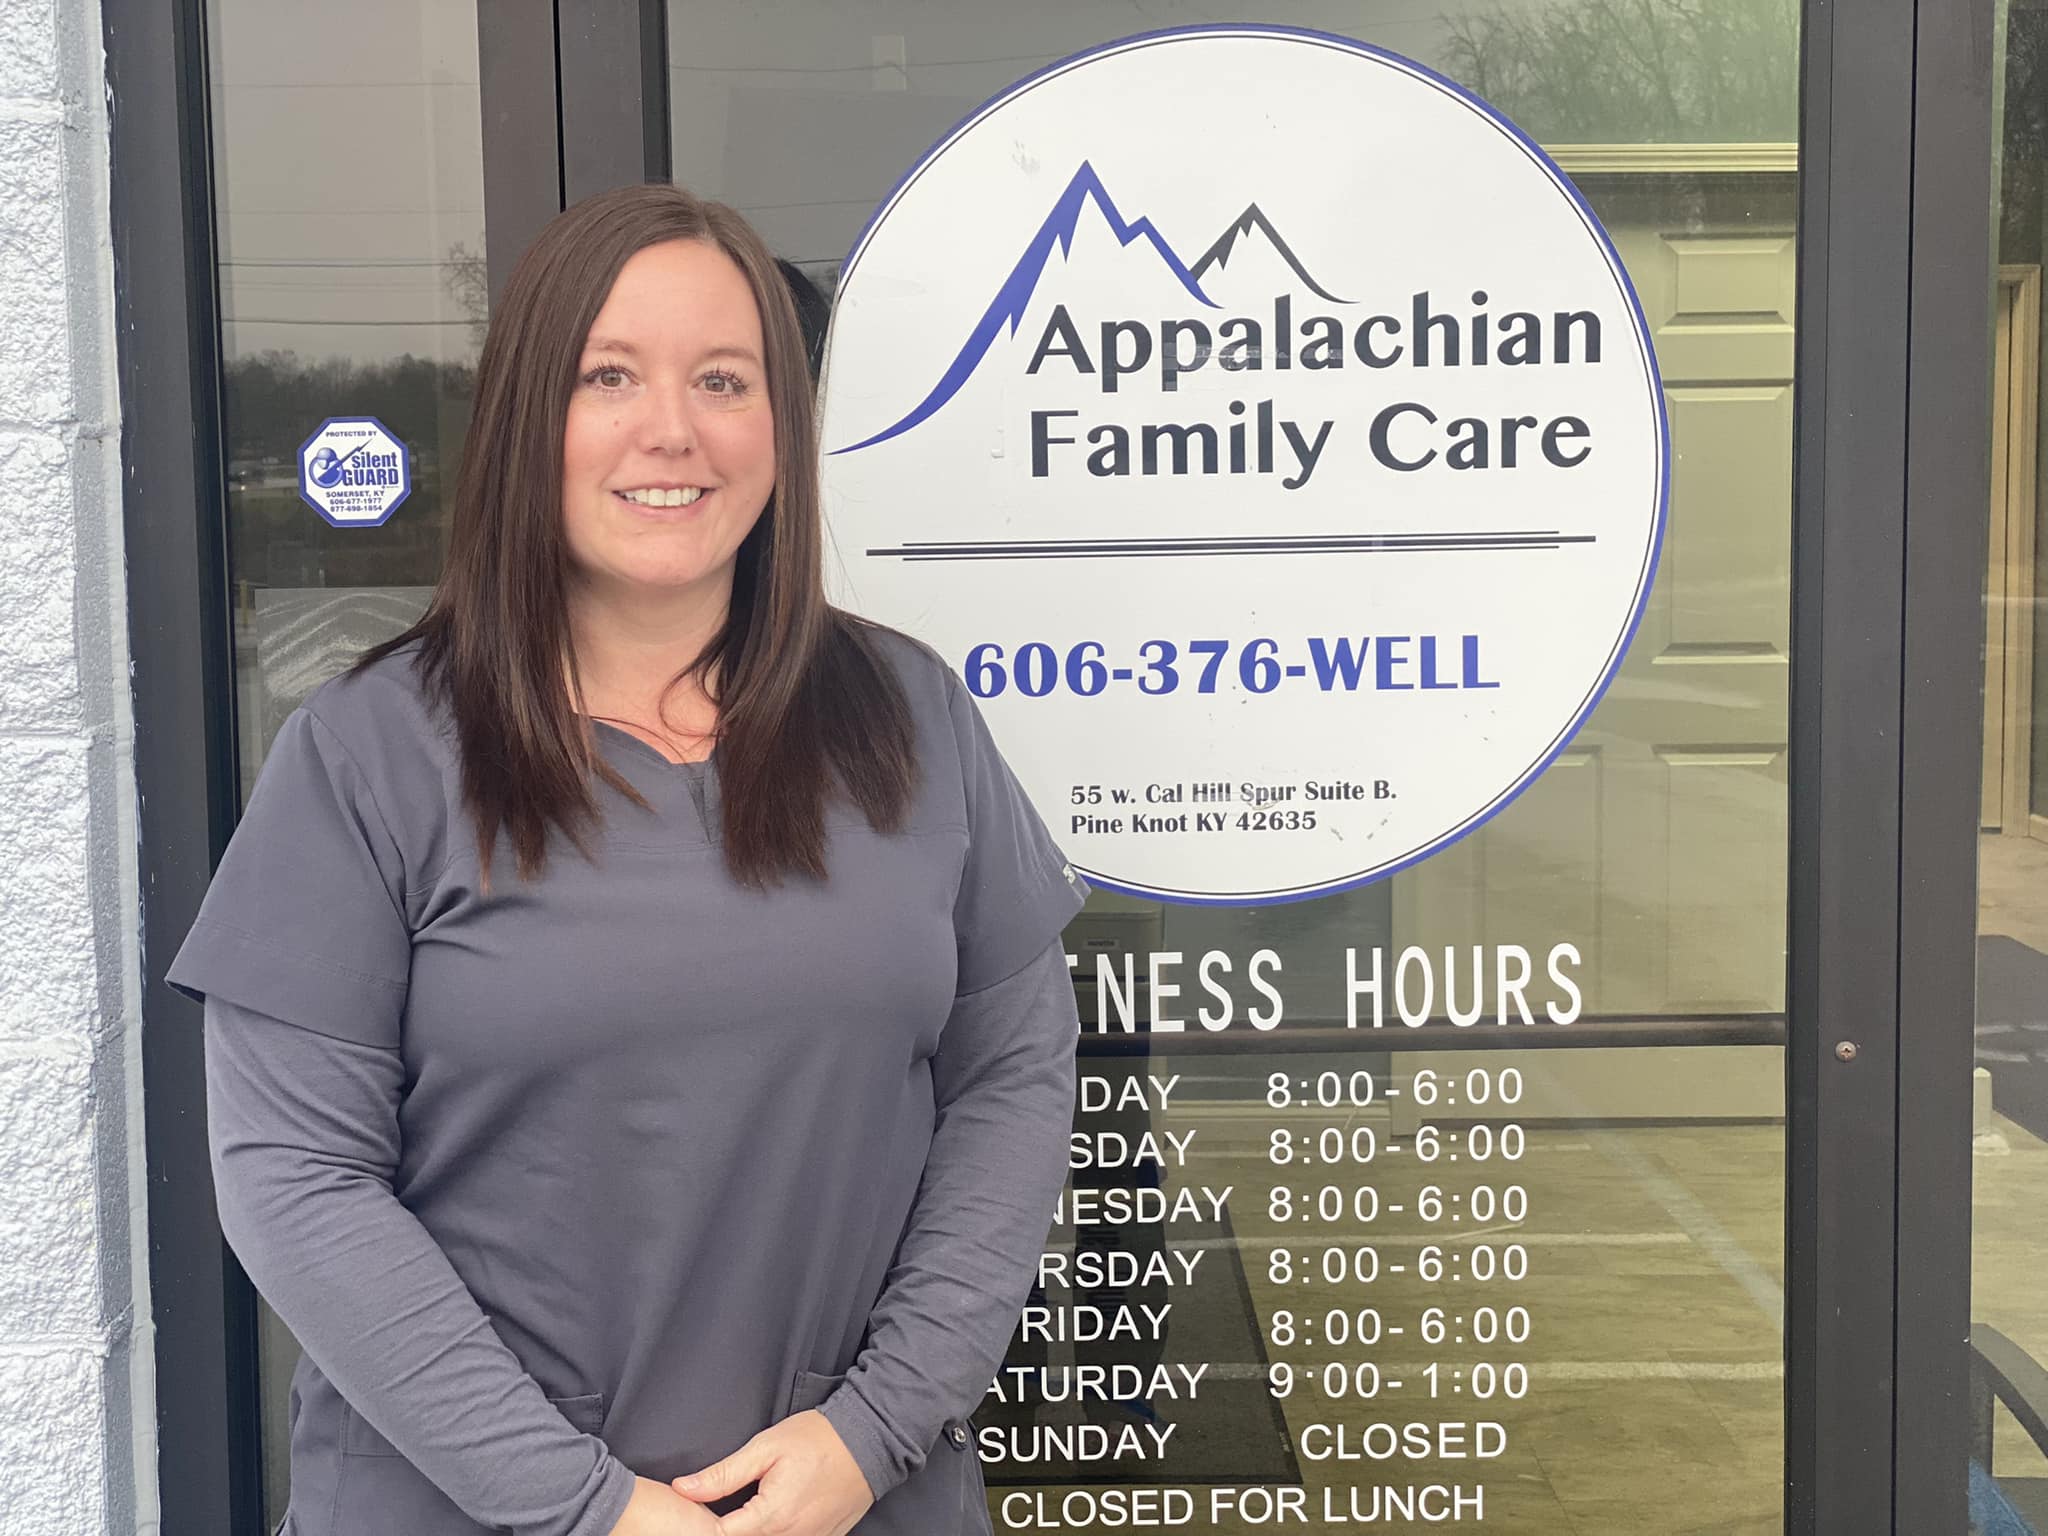 Appalachian Family Care 55 Cal Hill Spur, Pine Knot Kentucky 42635